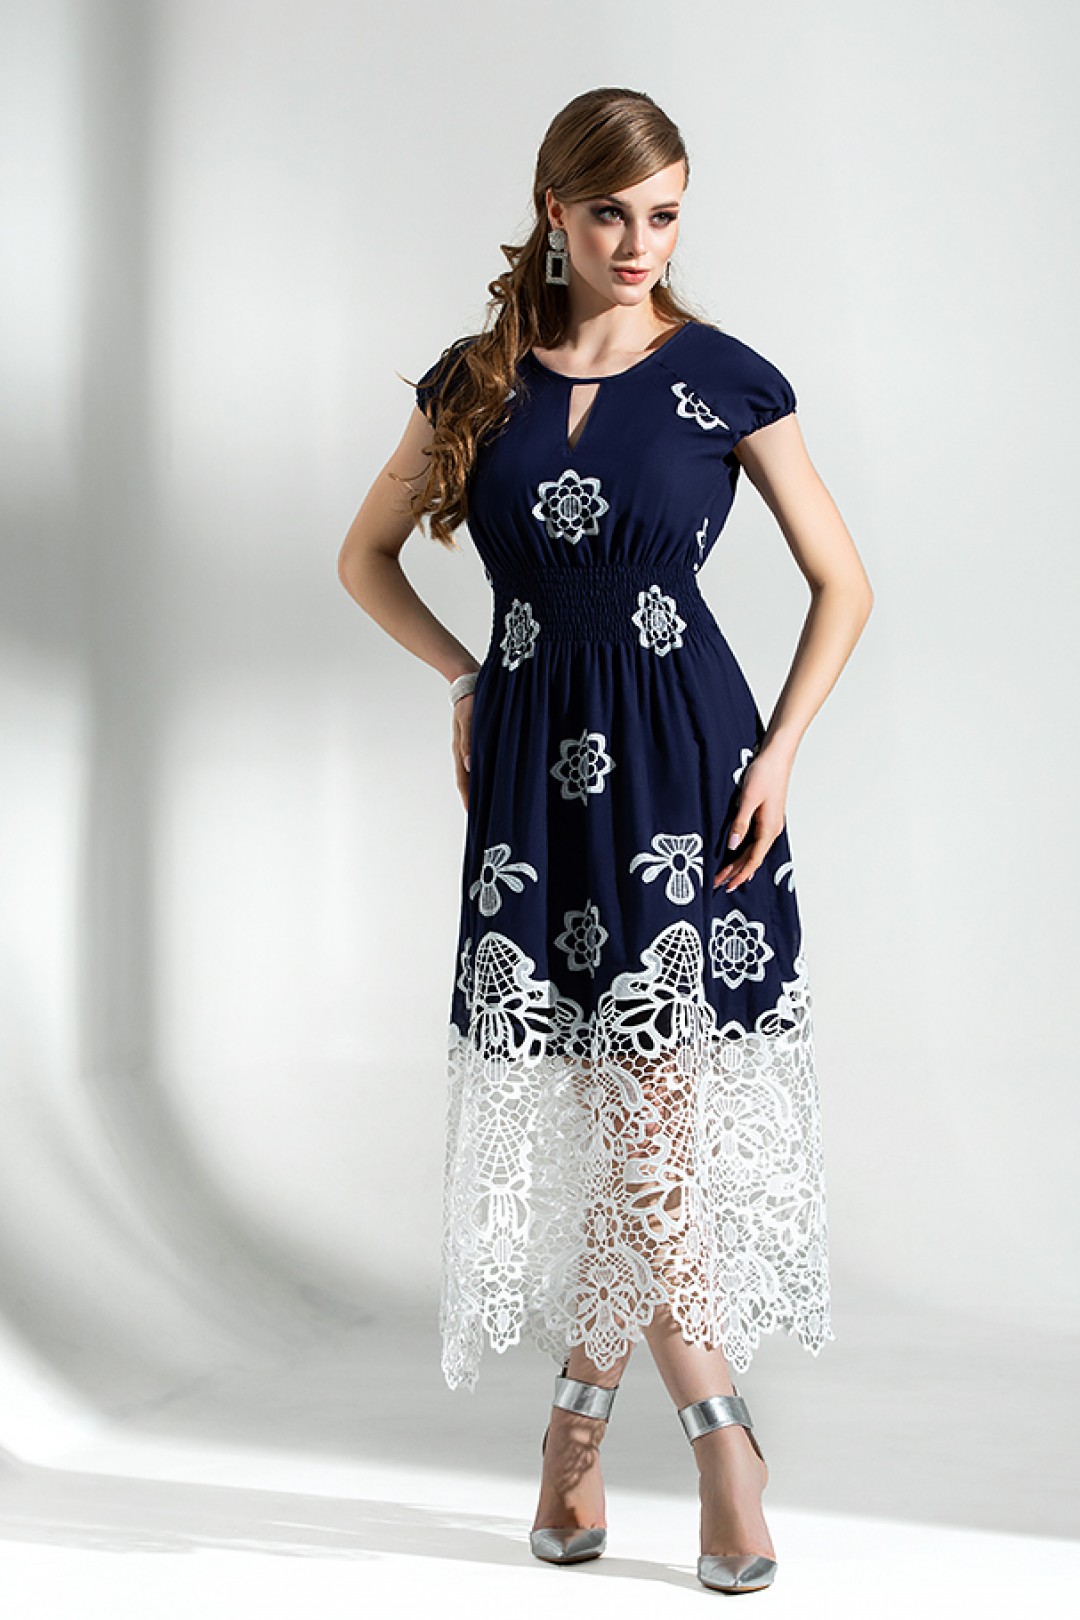 Платье Дива 1286 синий-белый